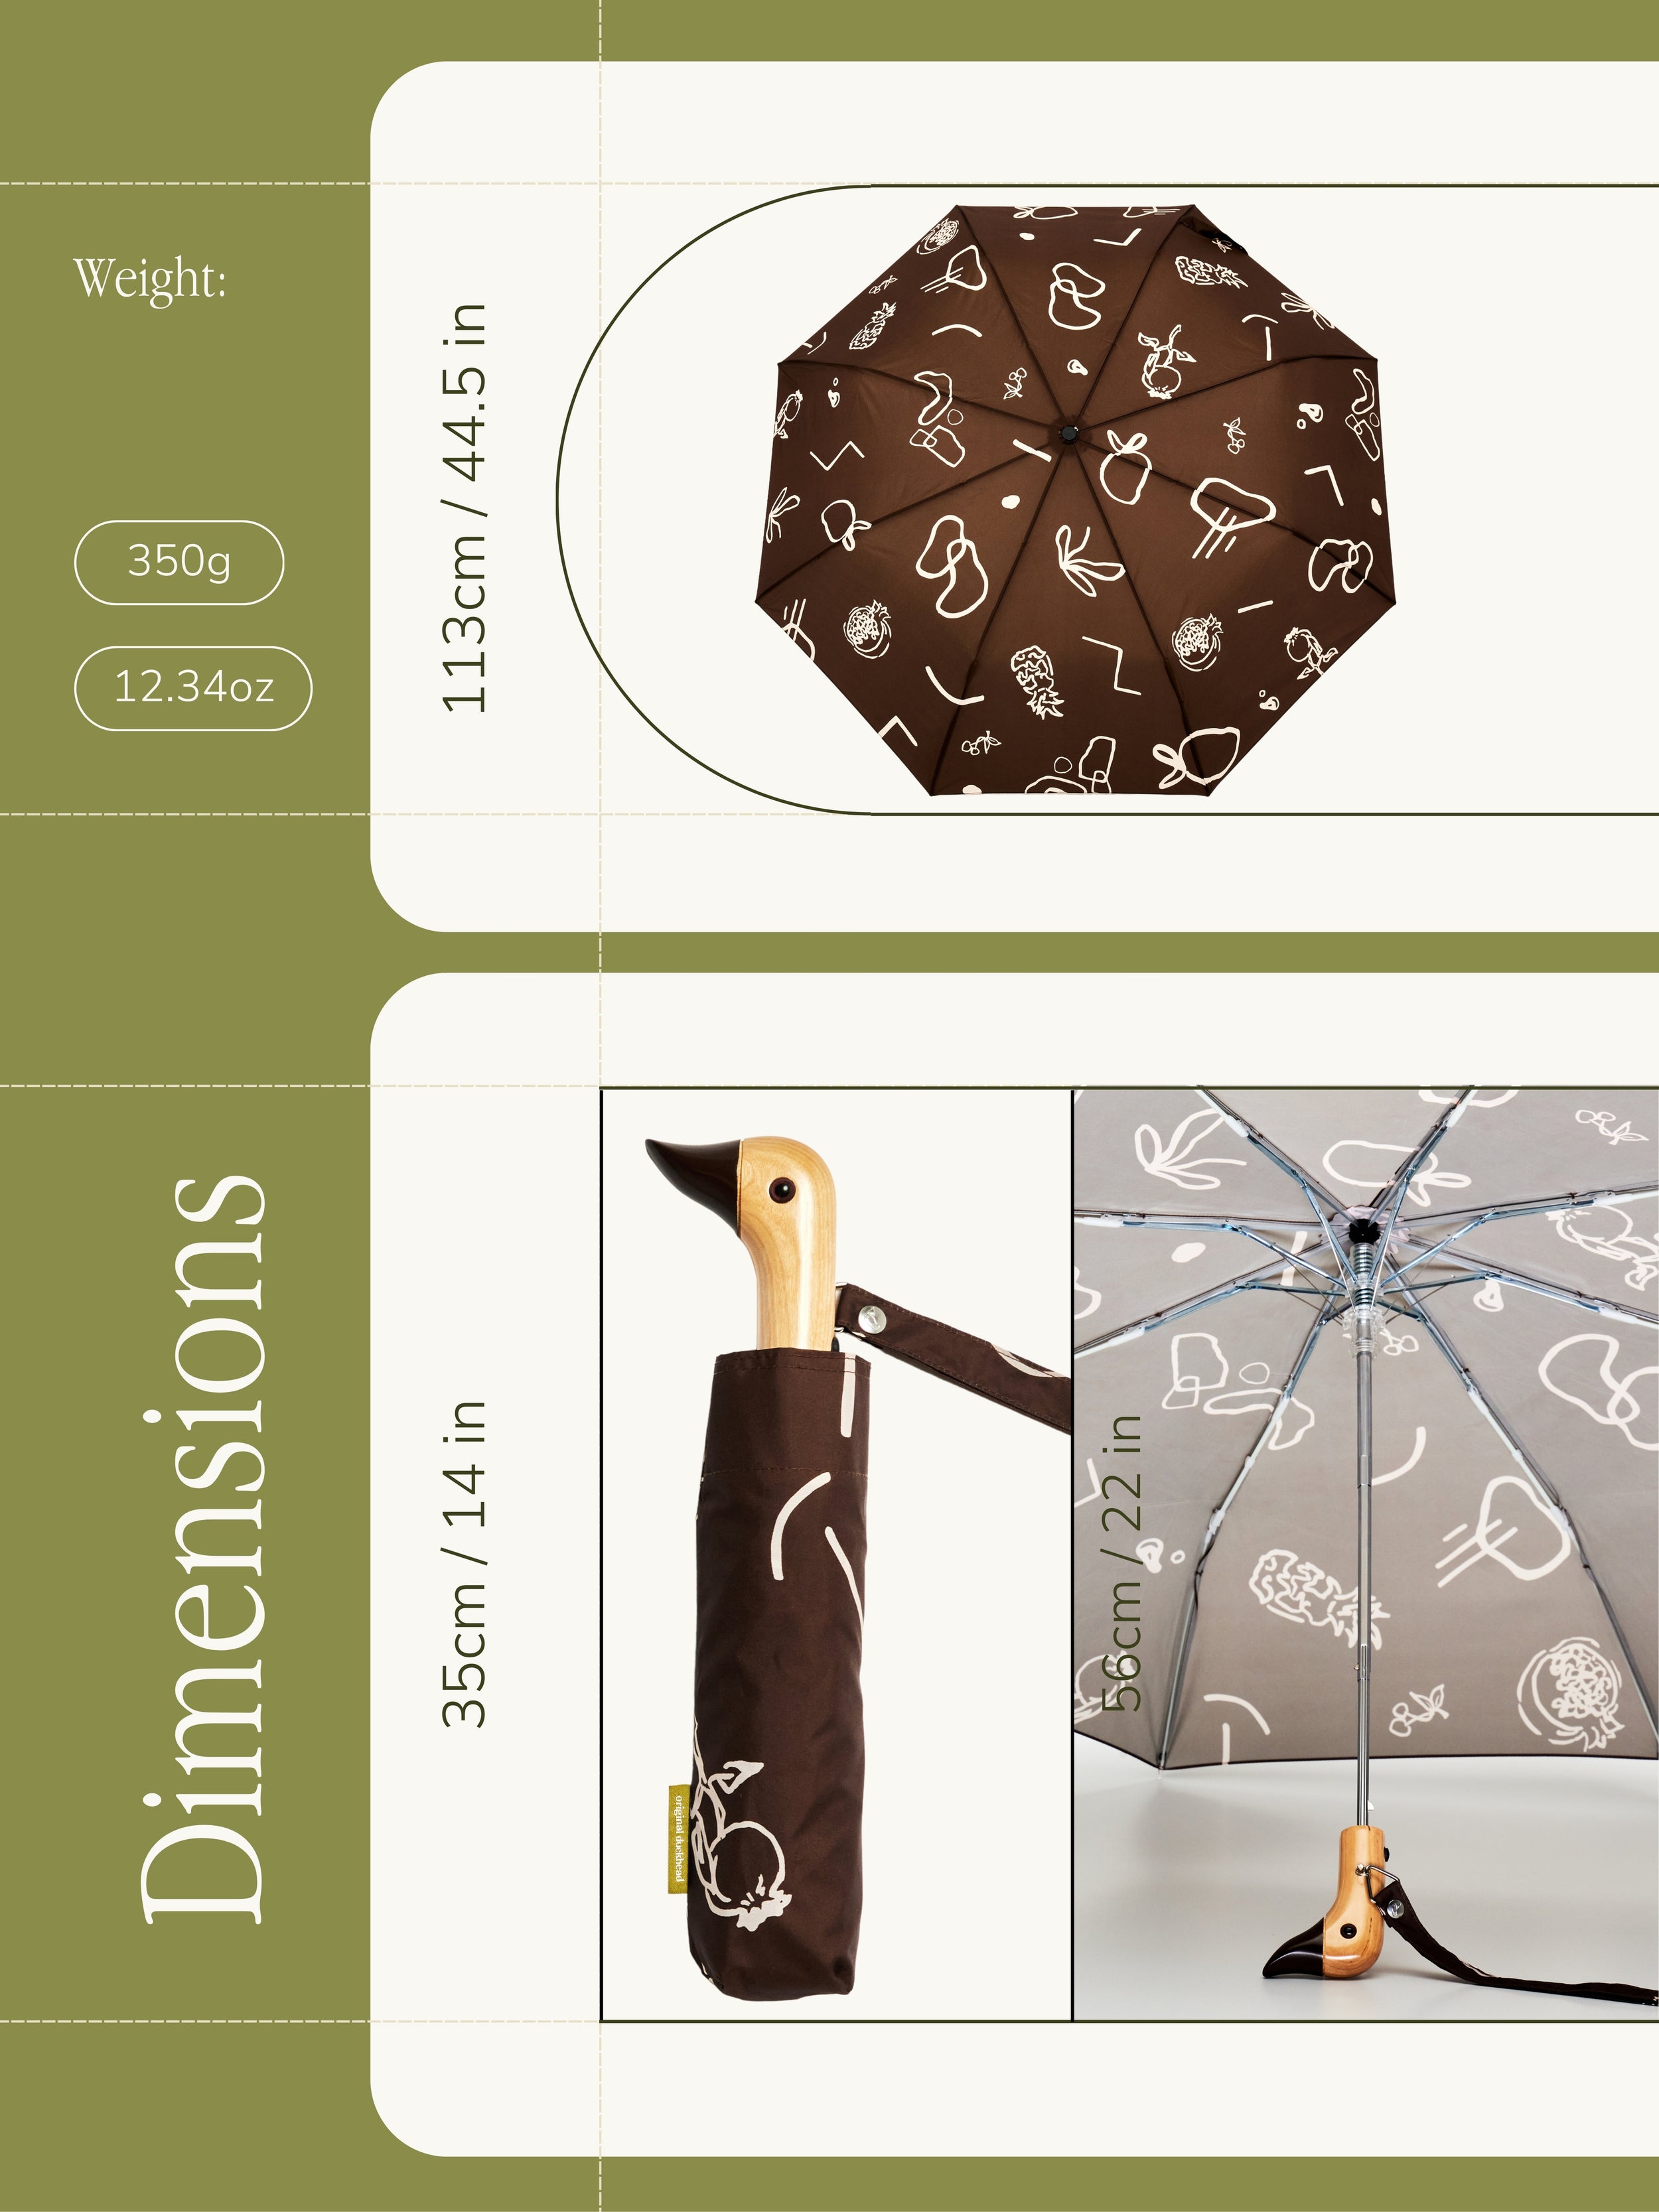 Chocolate Fruits & Shape Eco-Friendly Umbrella.